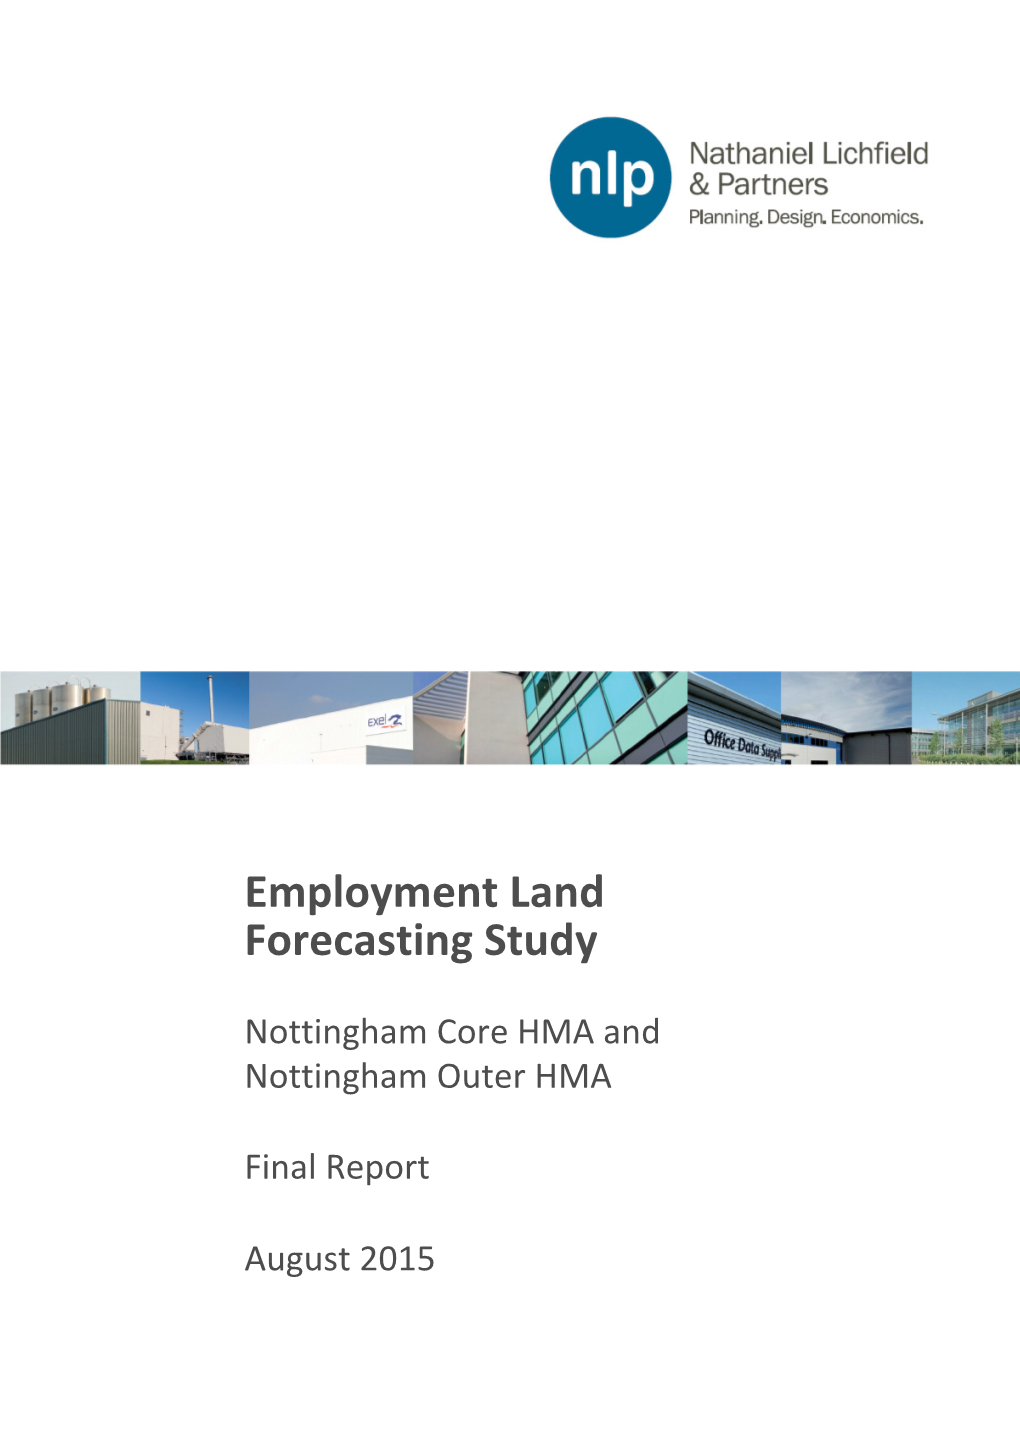 Employment Land Forecasting Study